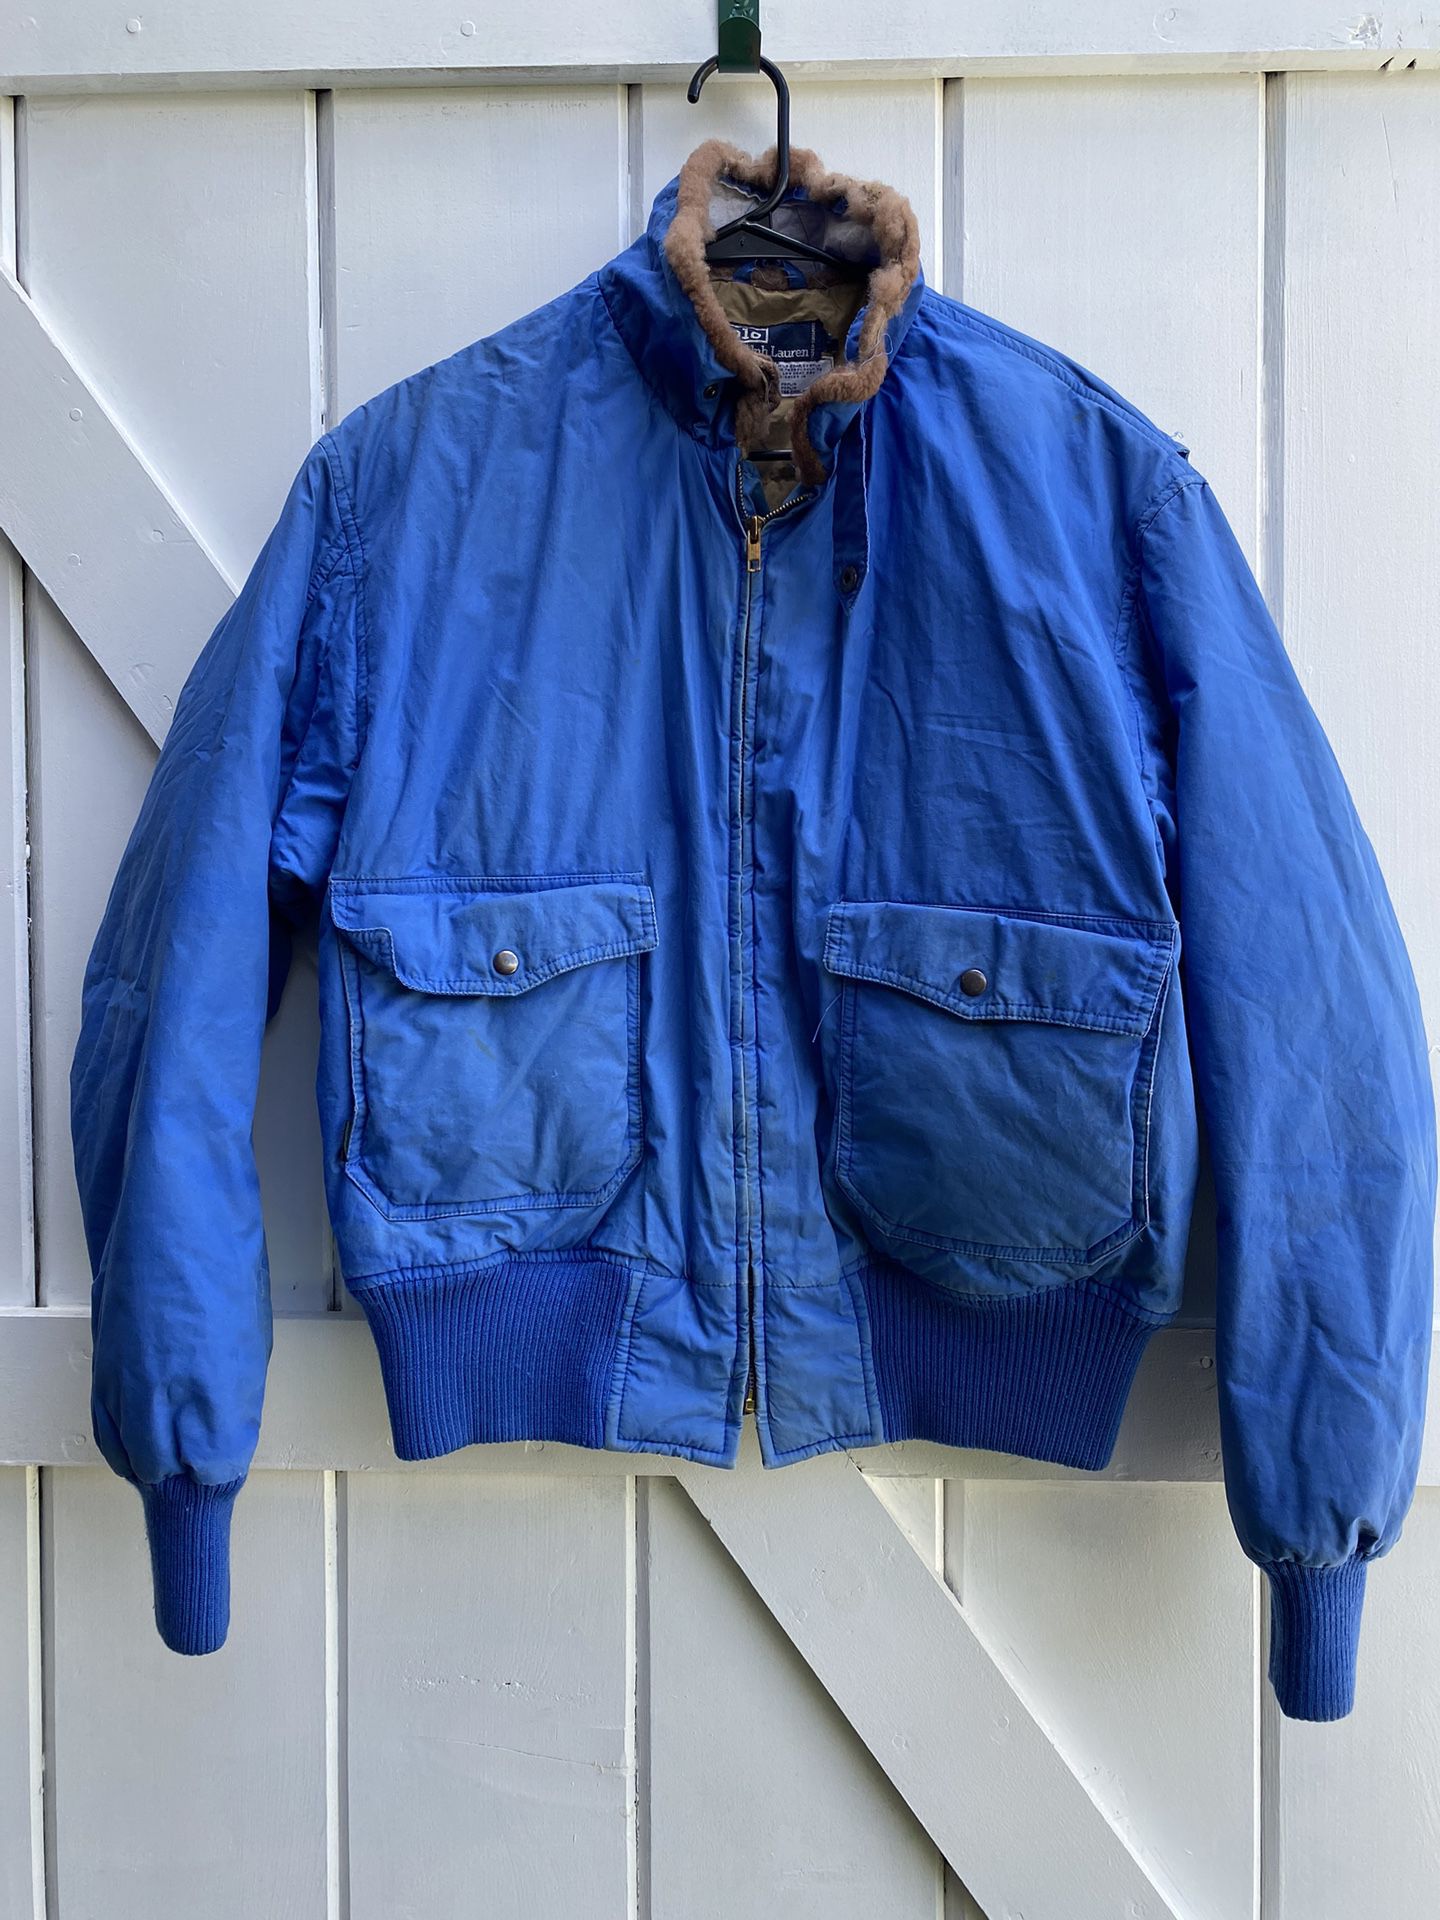 Vintage Polo Ralph Lauren Mens Navy Blue Bomber Jacket Size L